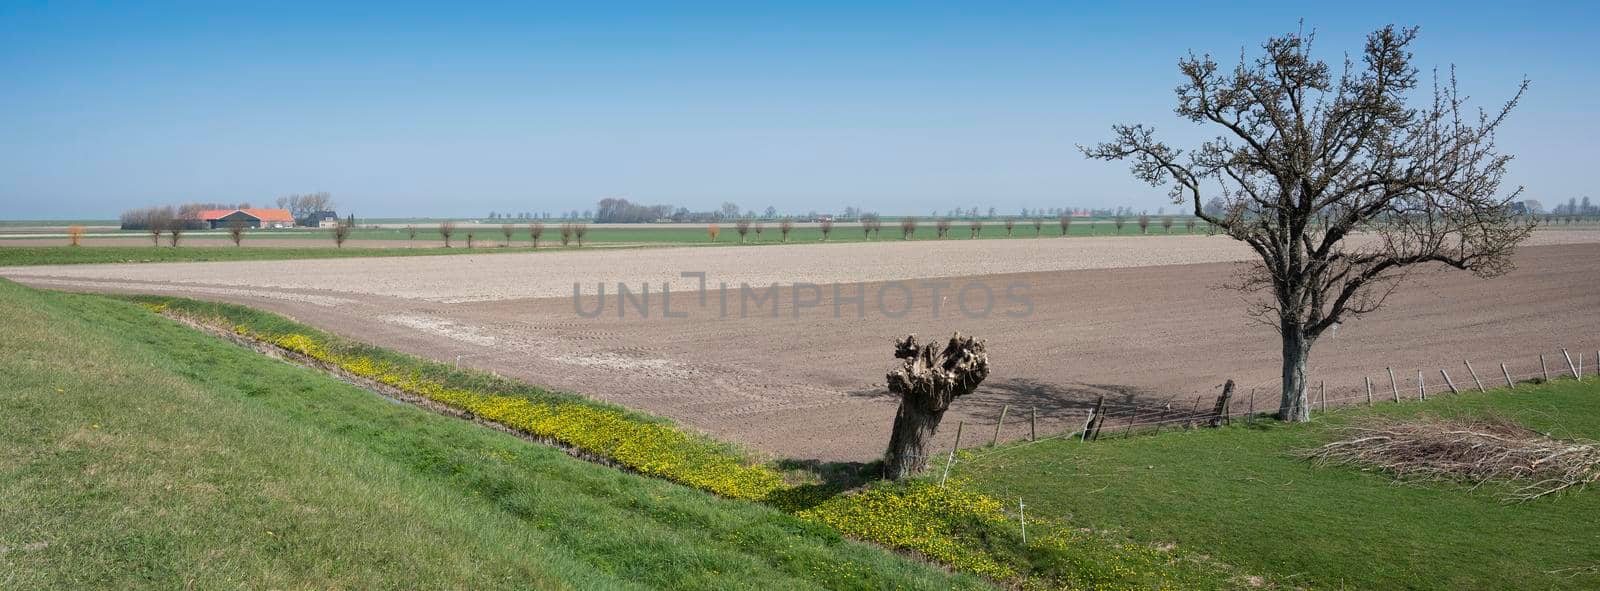 rural countryside of noord beveland in dutch province zeeland on sunny spring day by ahavelaar